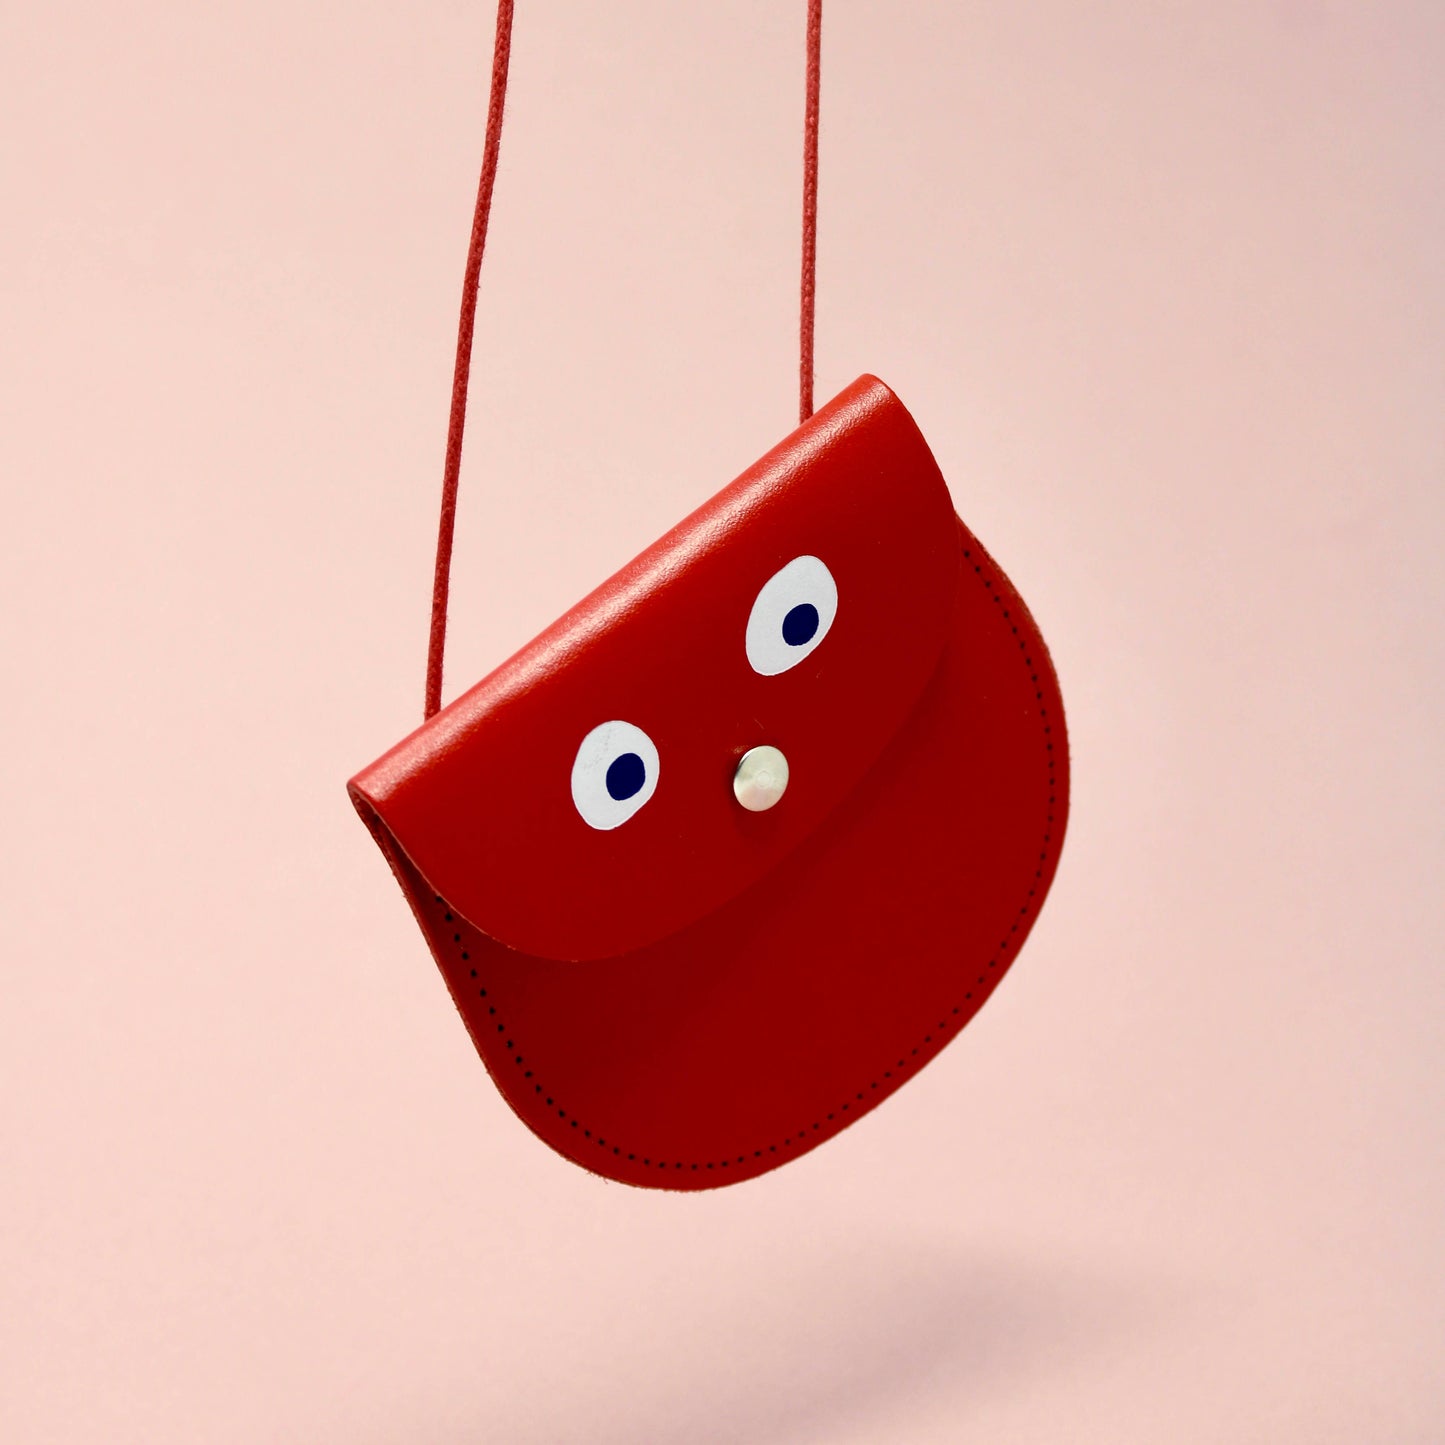 googly eye pocket money purse - red